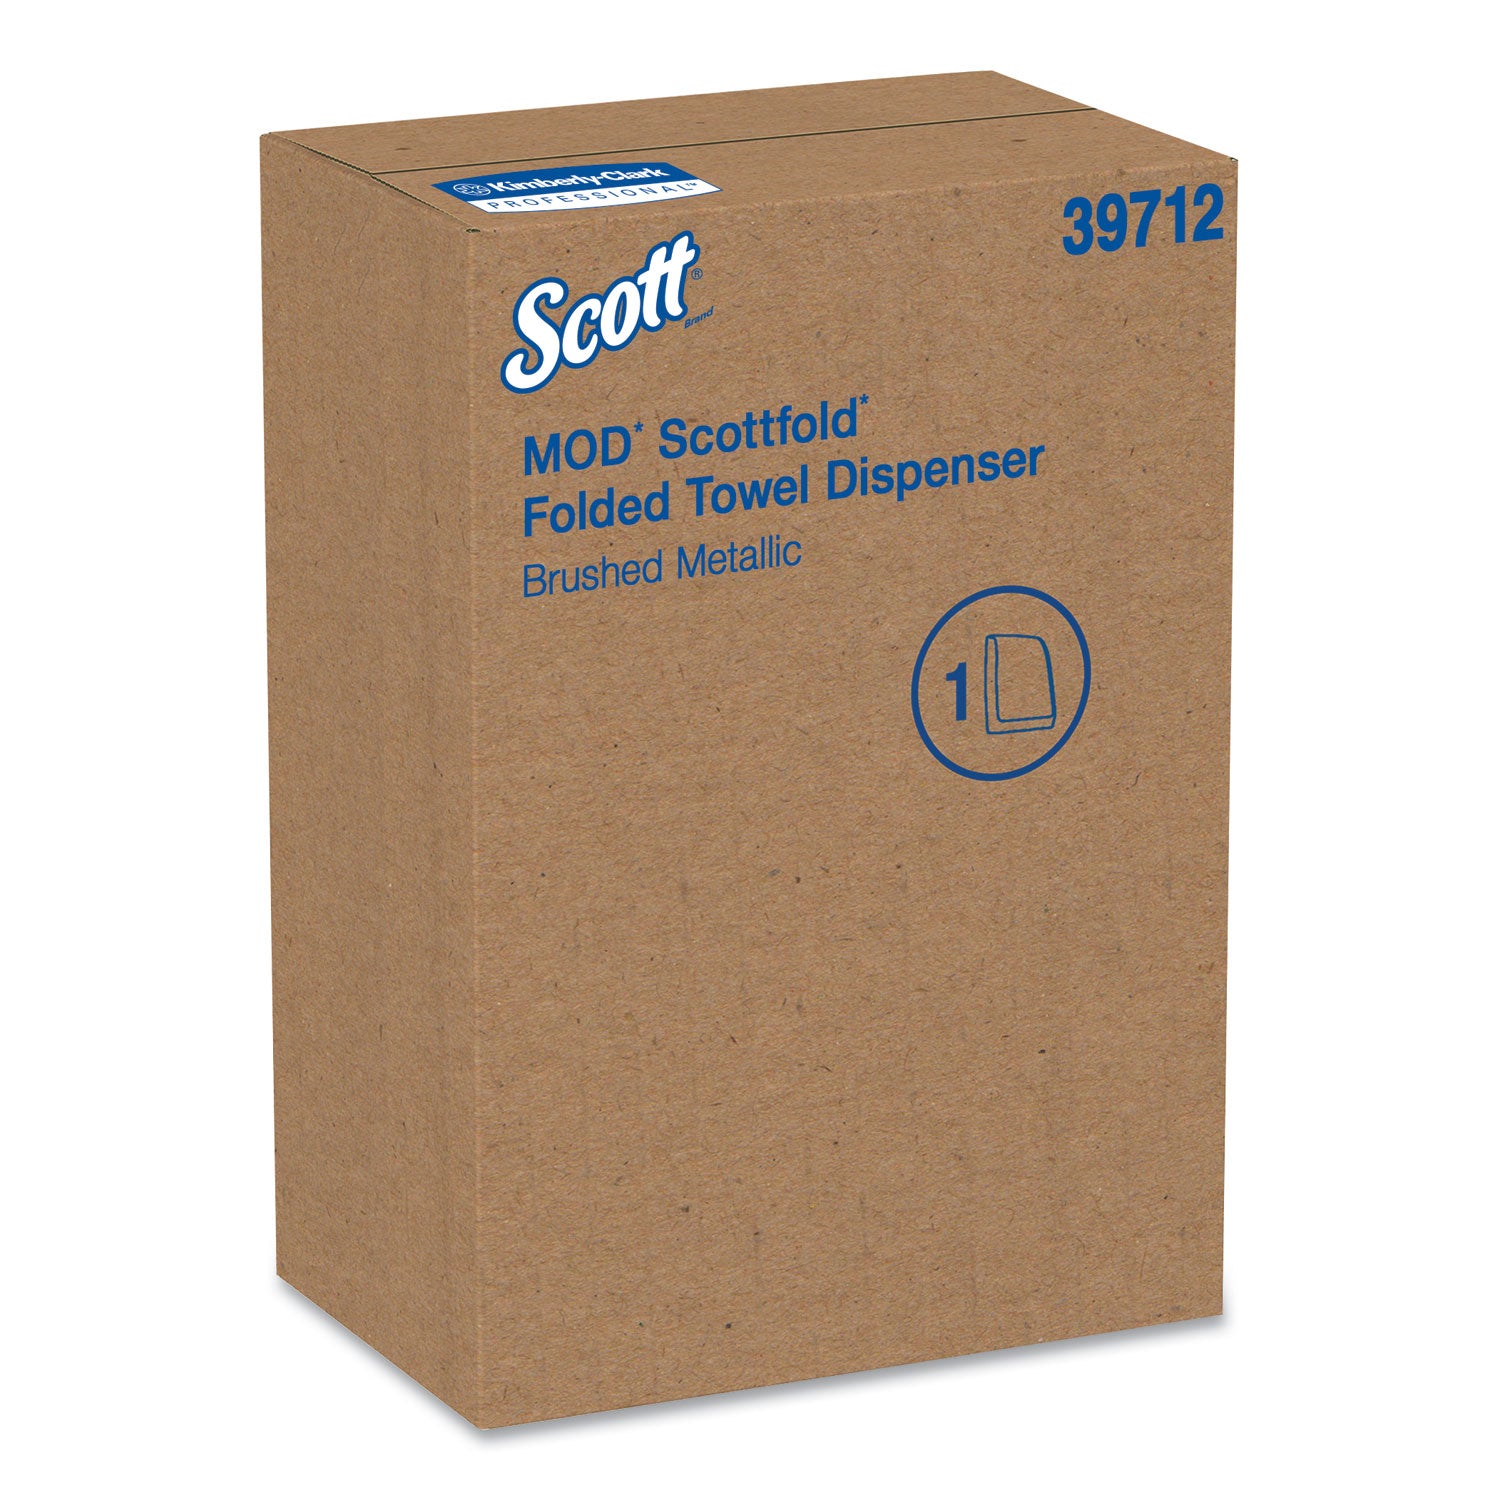 mod*-scottfold*-towel-dispenser-106-x-548-x-1879-brushed-metallic_kcc39712 - 2